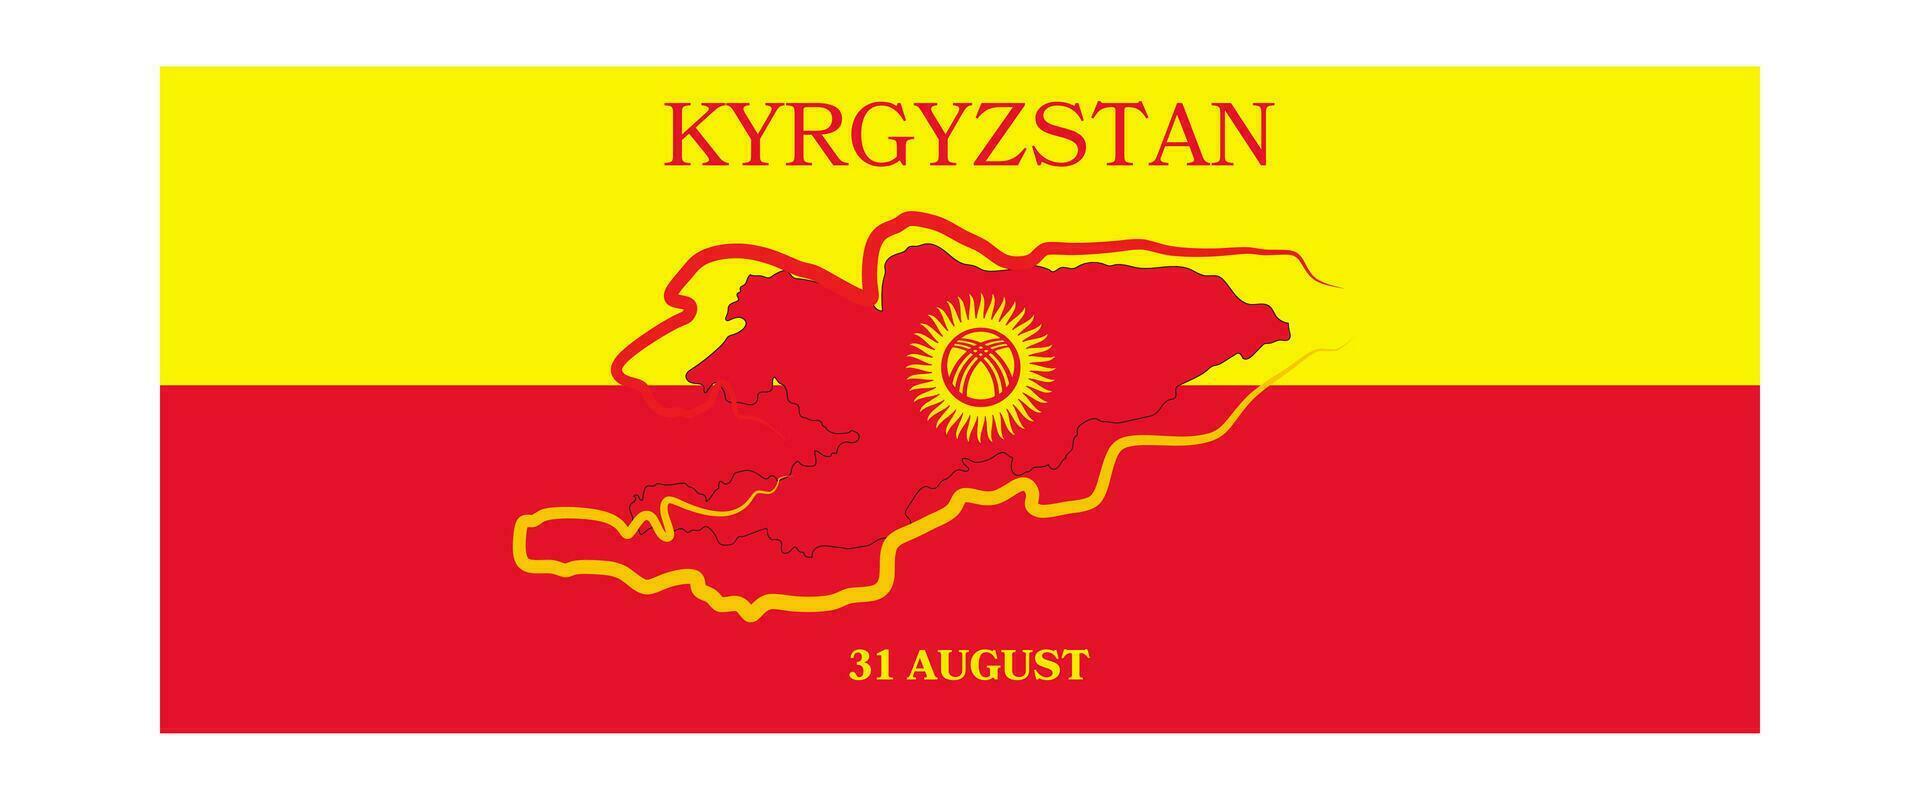 Kyrgyzstan national day banner modern style vector